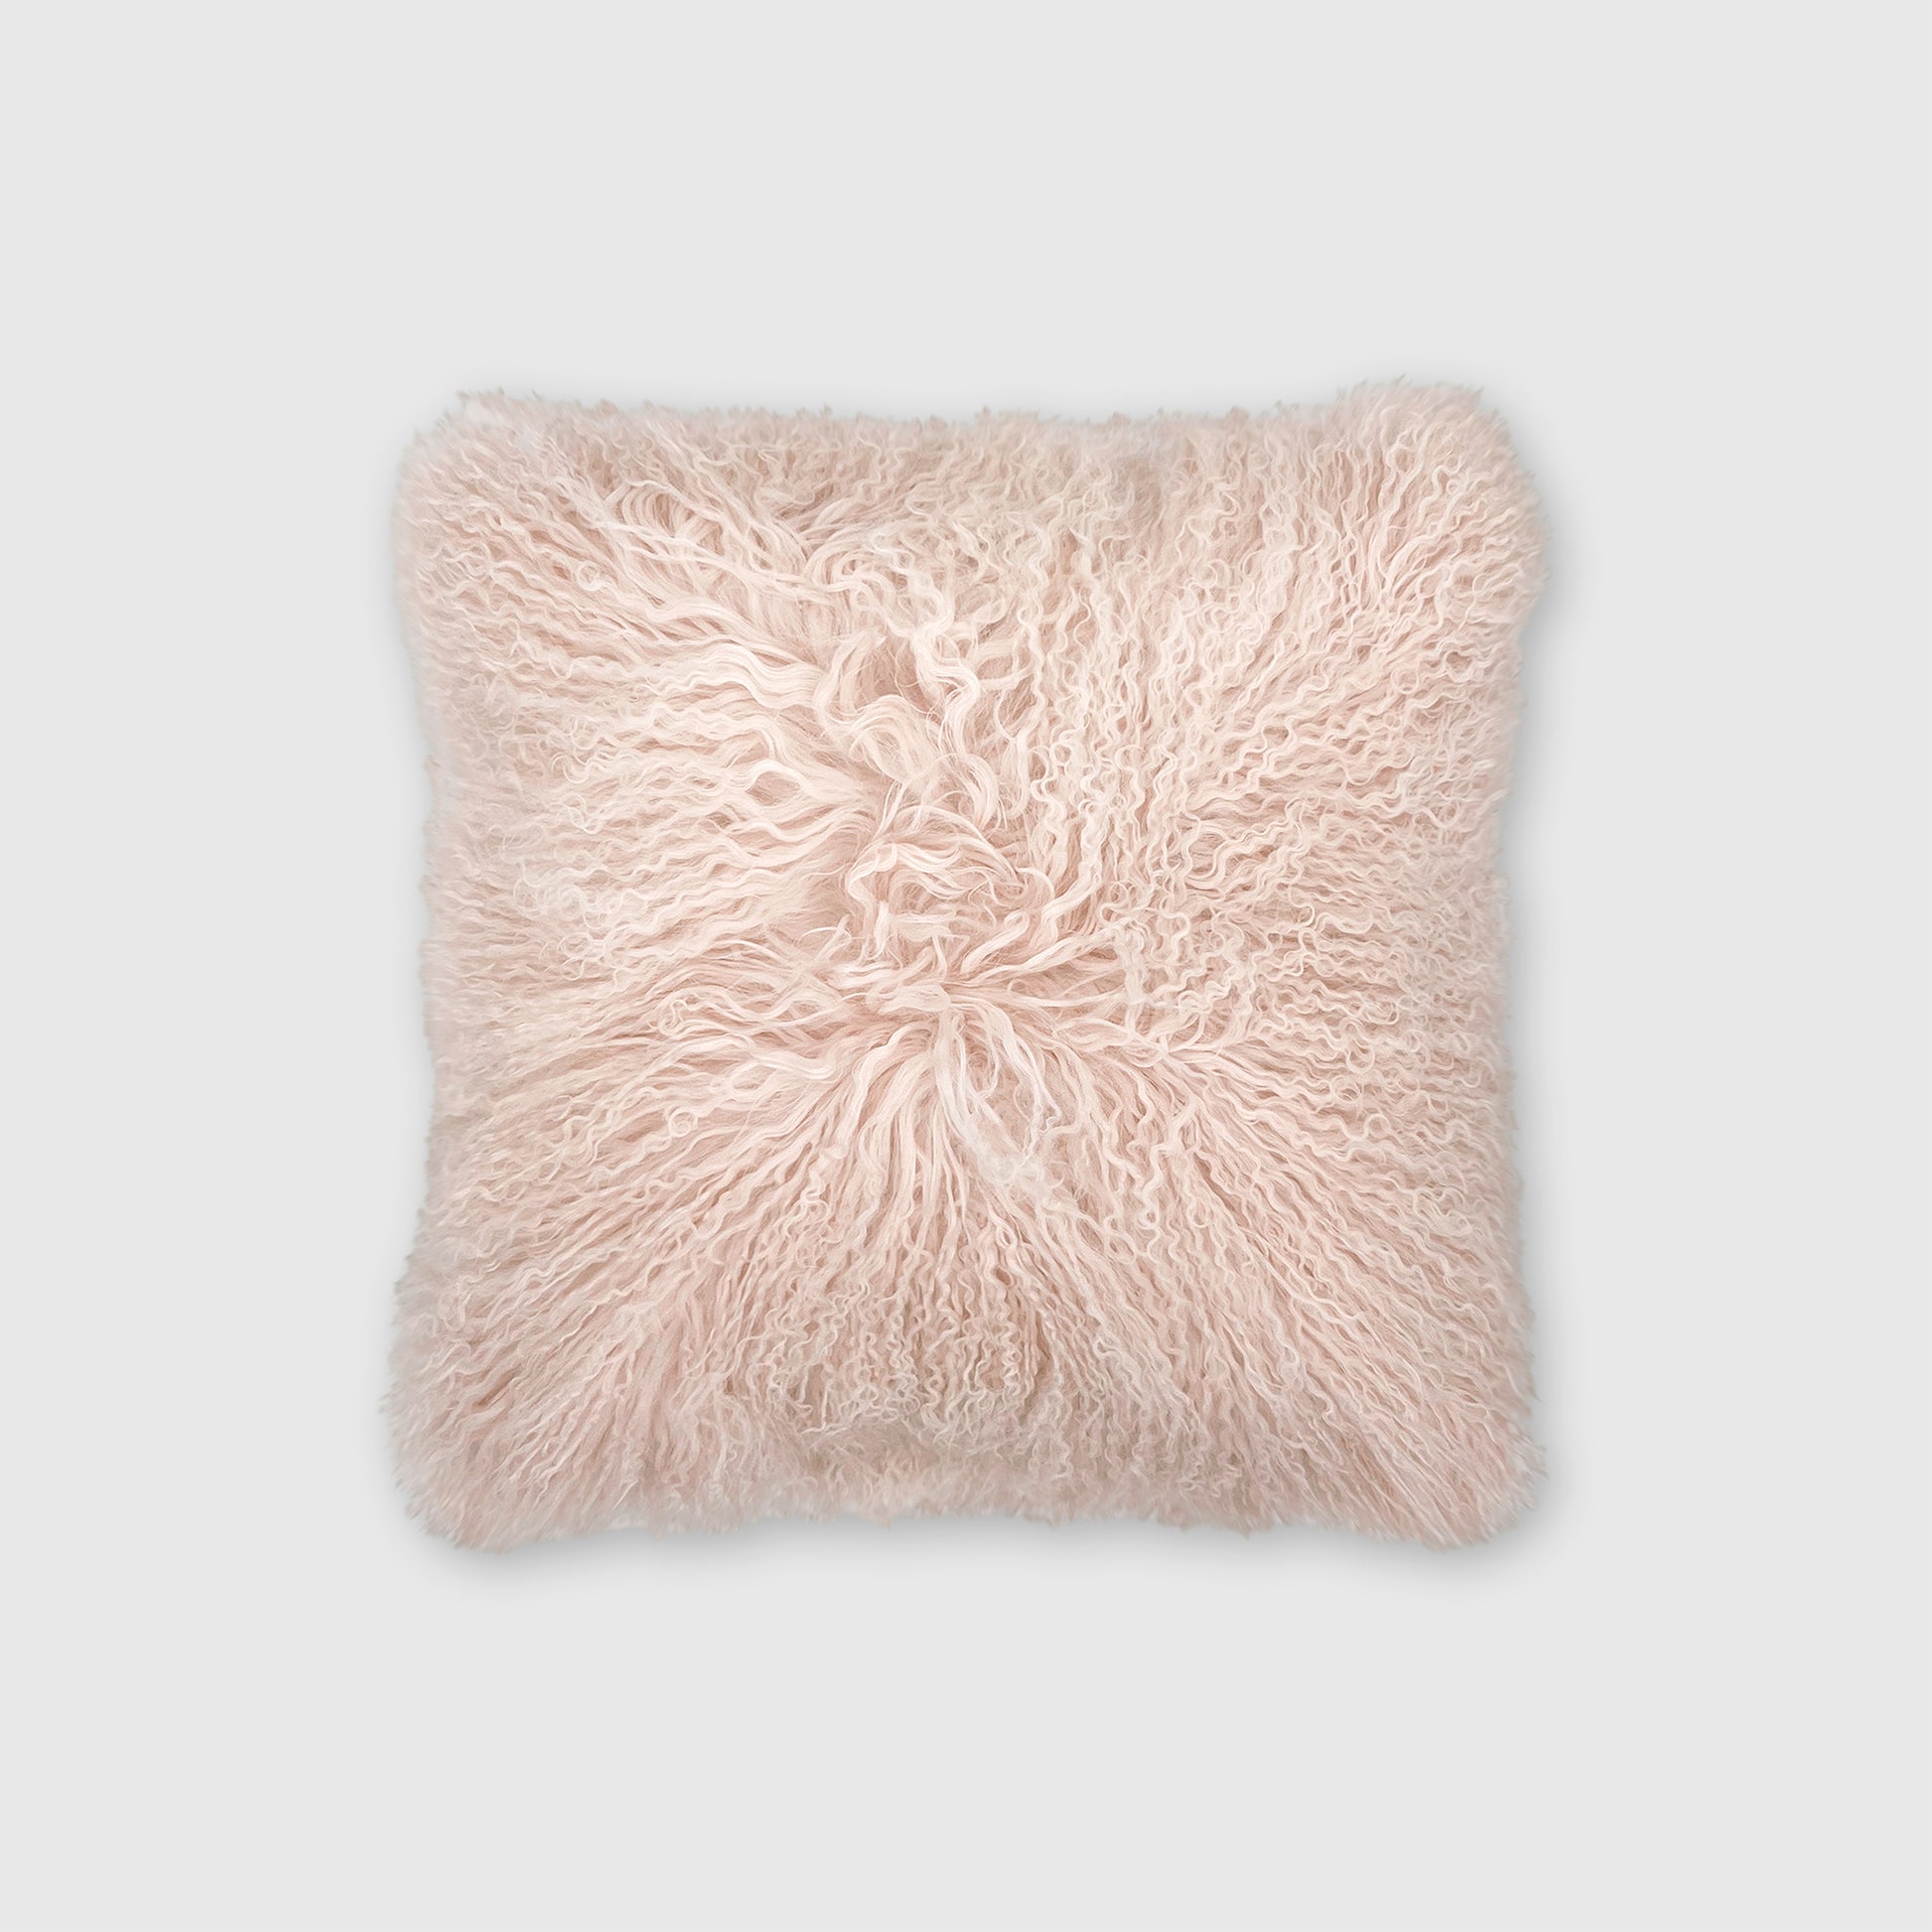 The Mood | Gobi Mongolian Lambskin 16”x16” Pillow, Cloud Pink